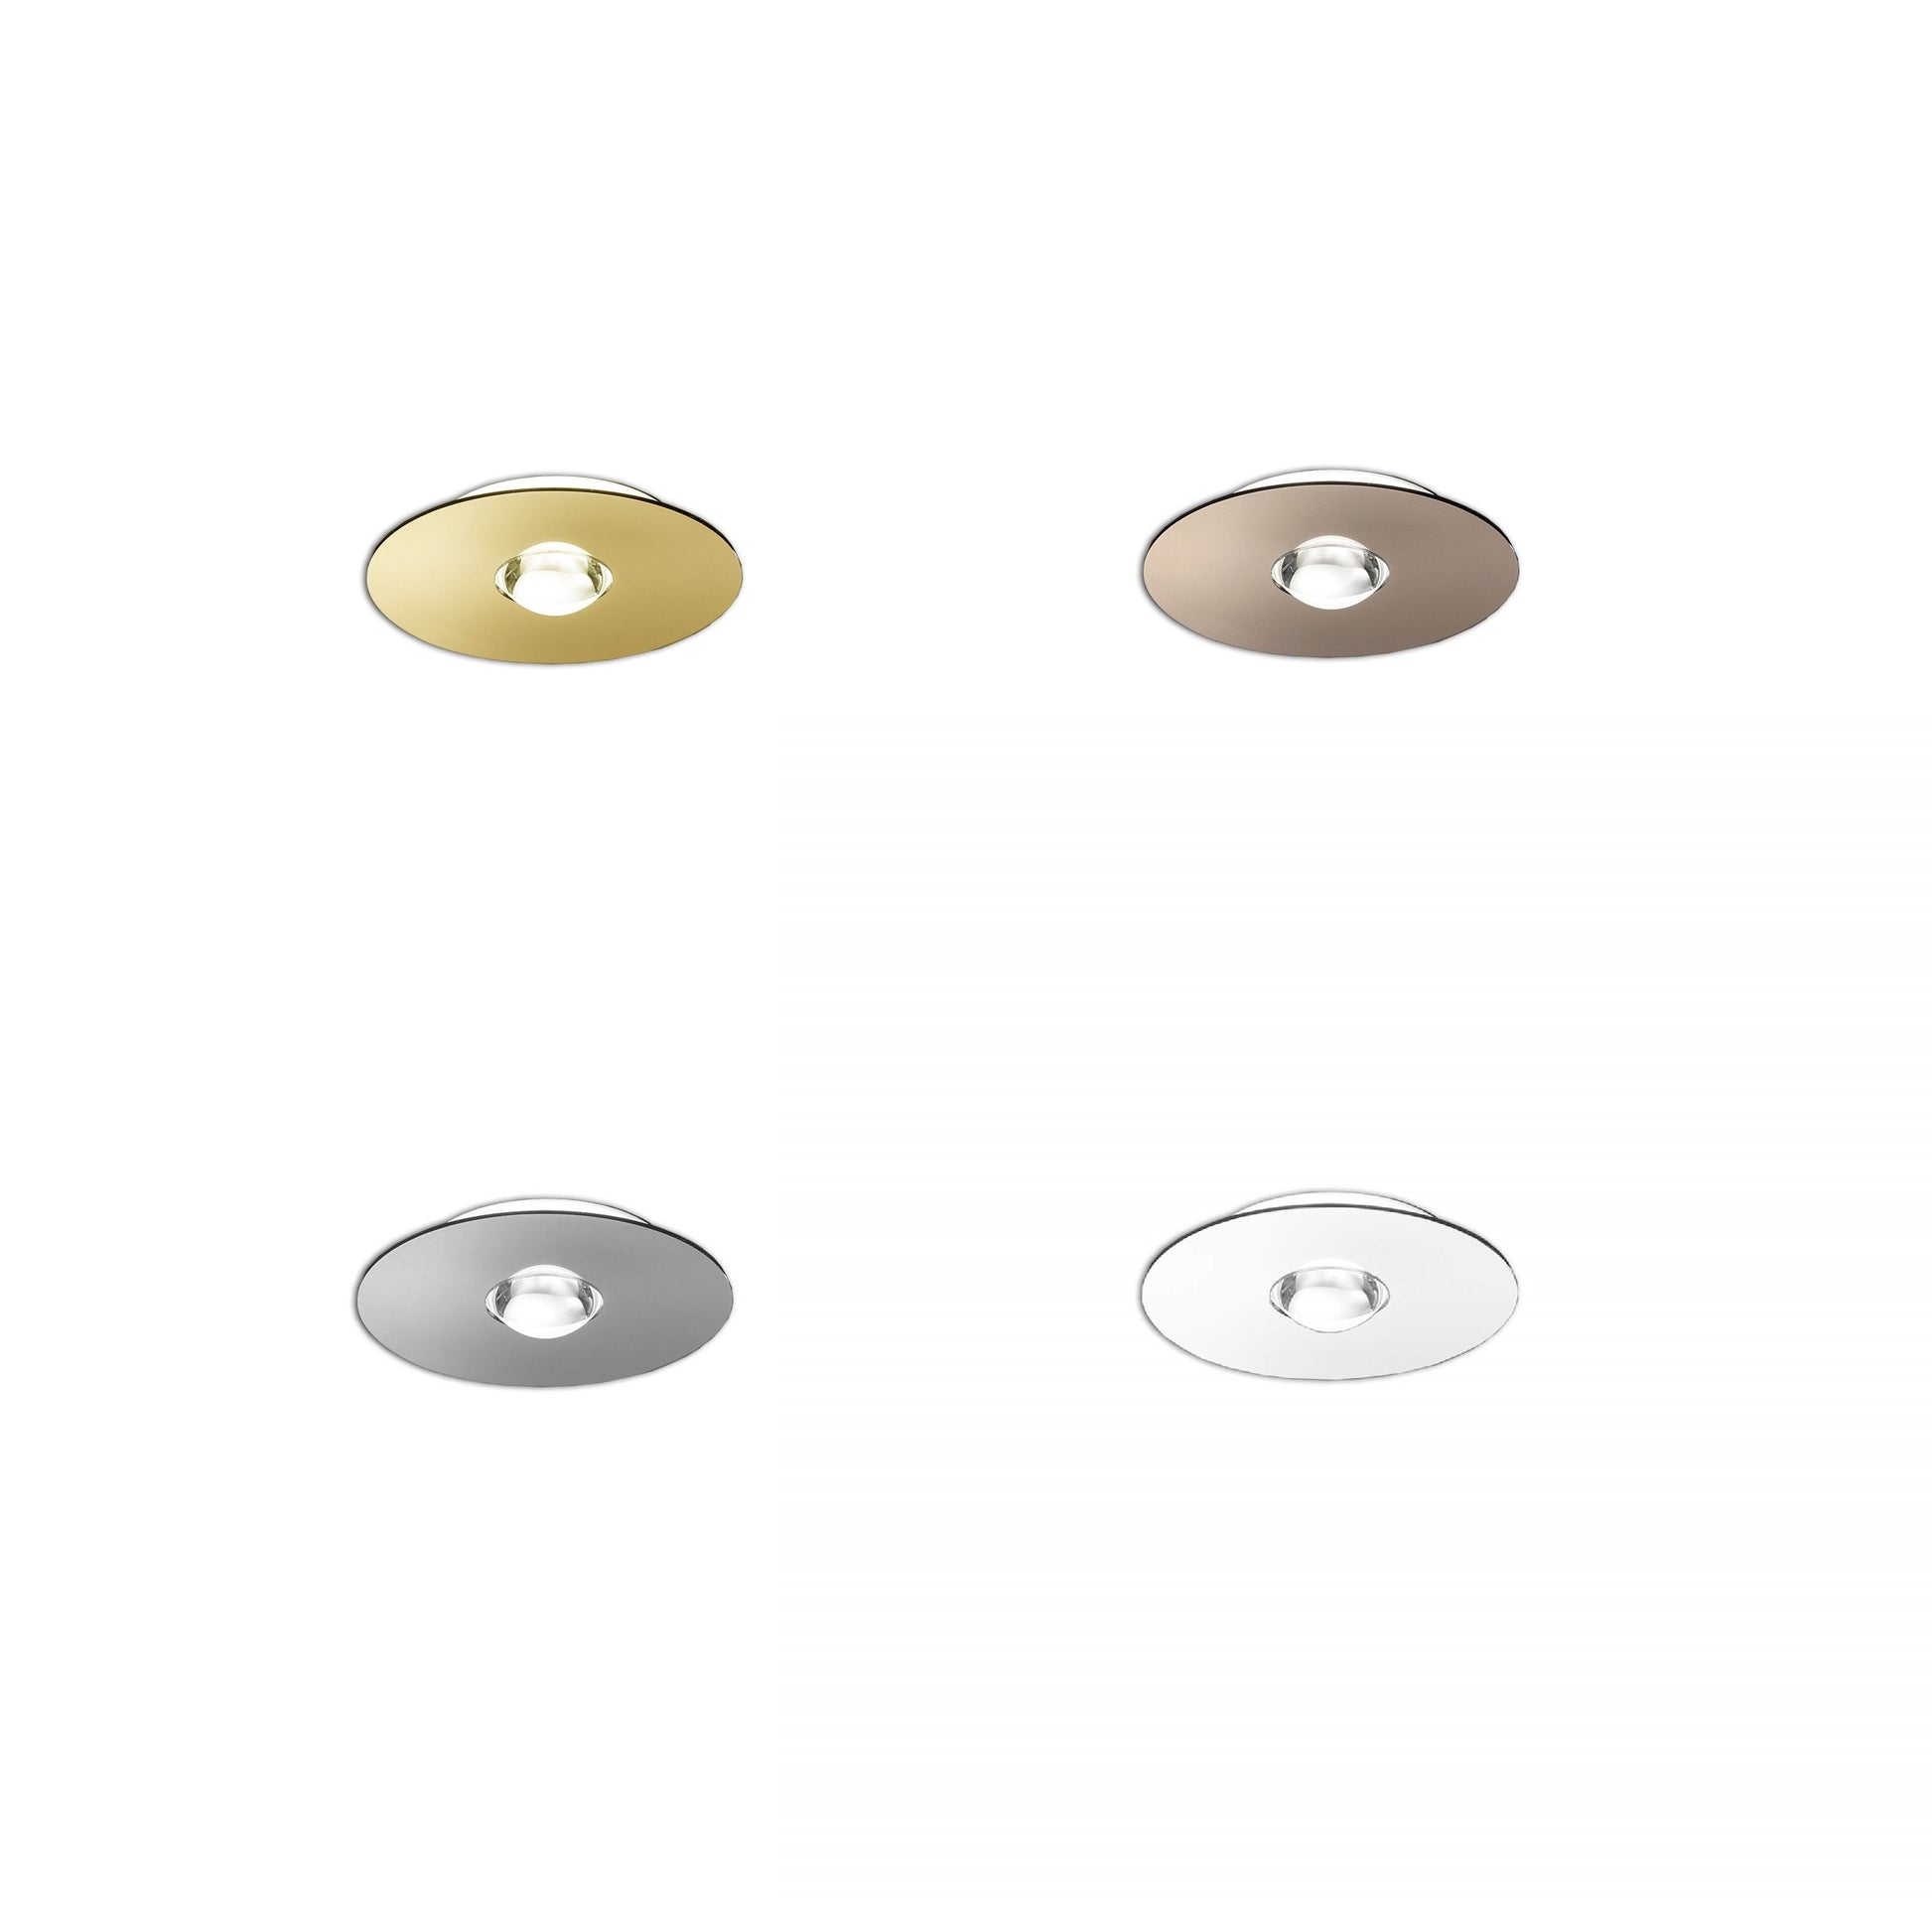 Bugia PL1 loftlampe vist i alle fire farver fra studio italia design